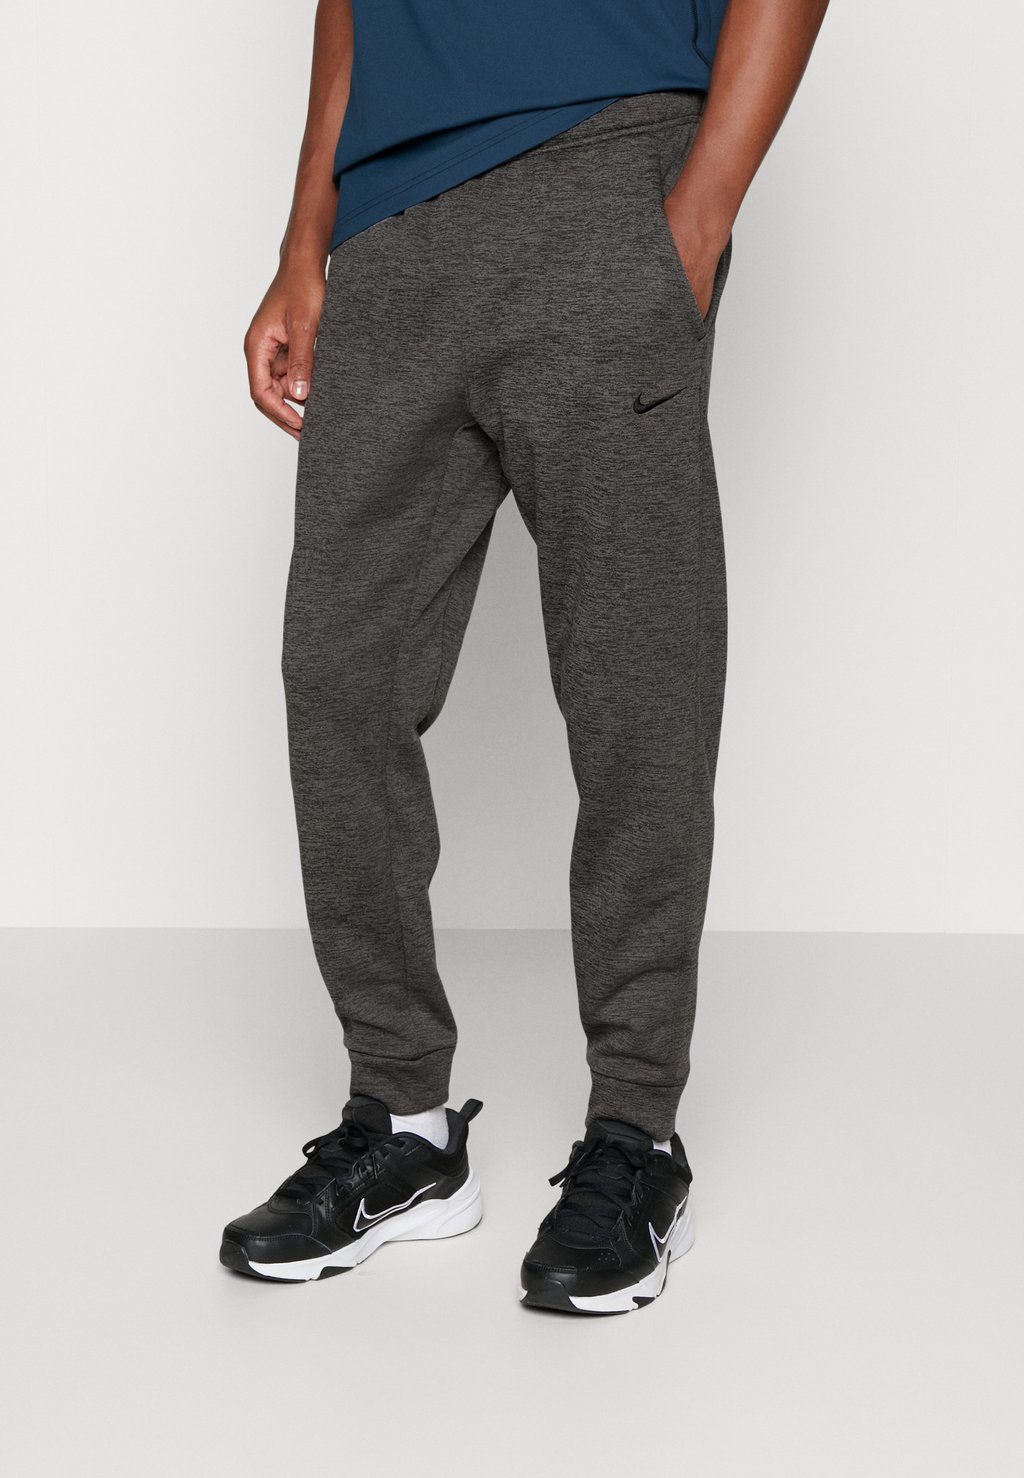 Спортивные брюки PANT TAPER Nike, темно-серый/темно-дымчато-серый/черный спортивные брюки pant taper nike deep jungle